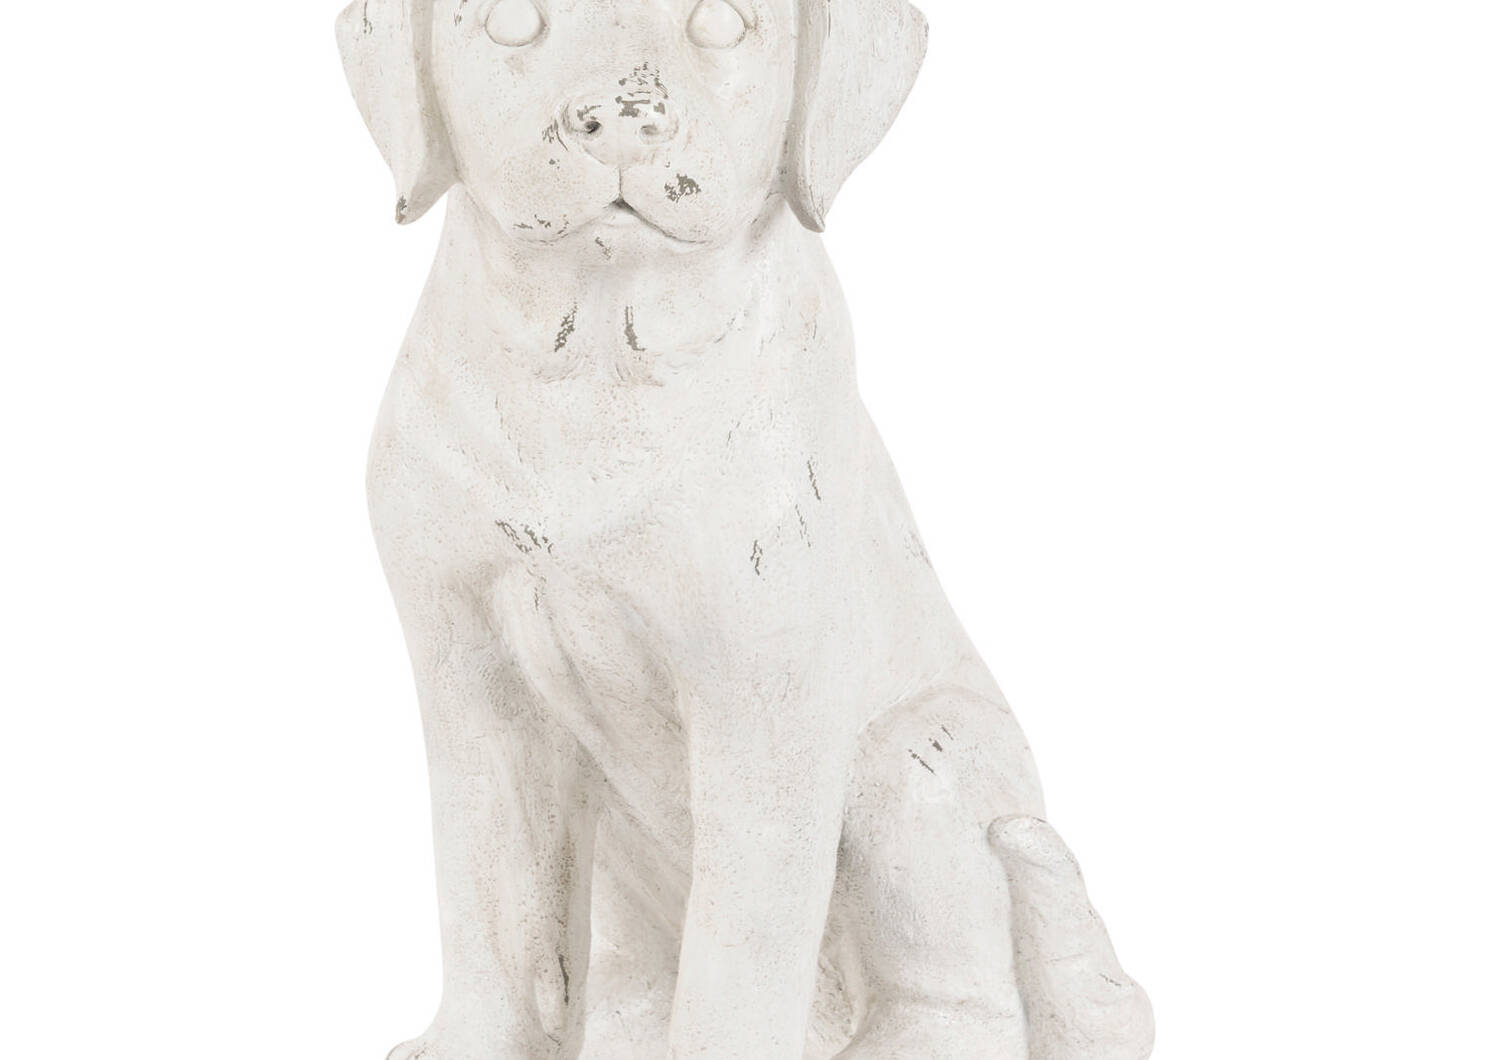 Buster Puppy Sculpture Antique White